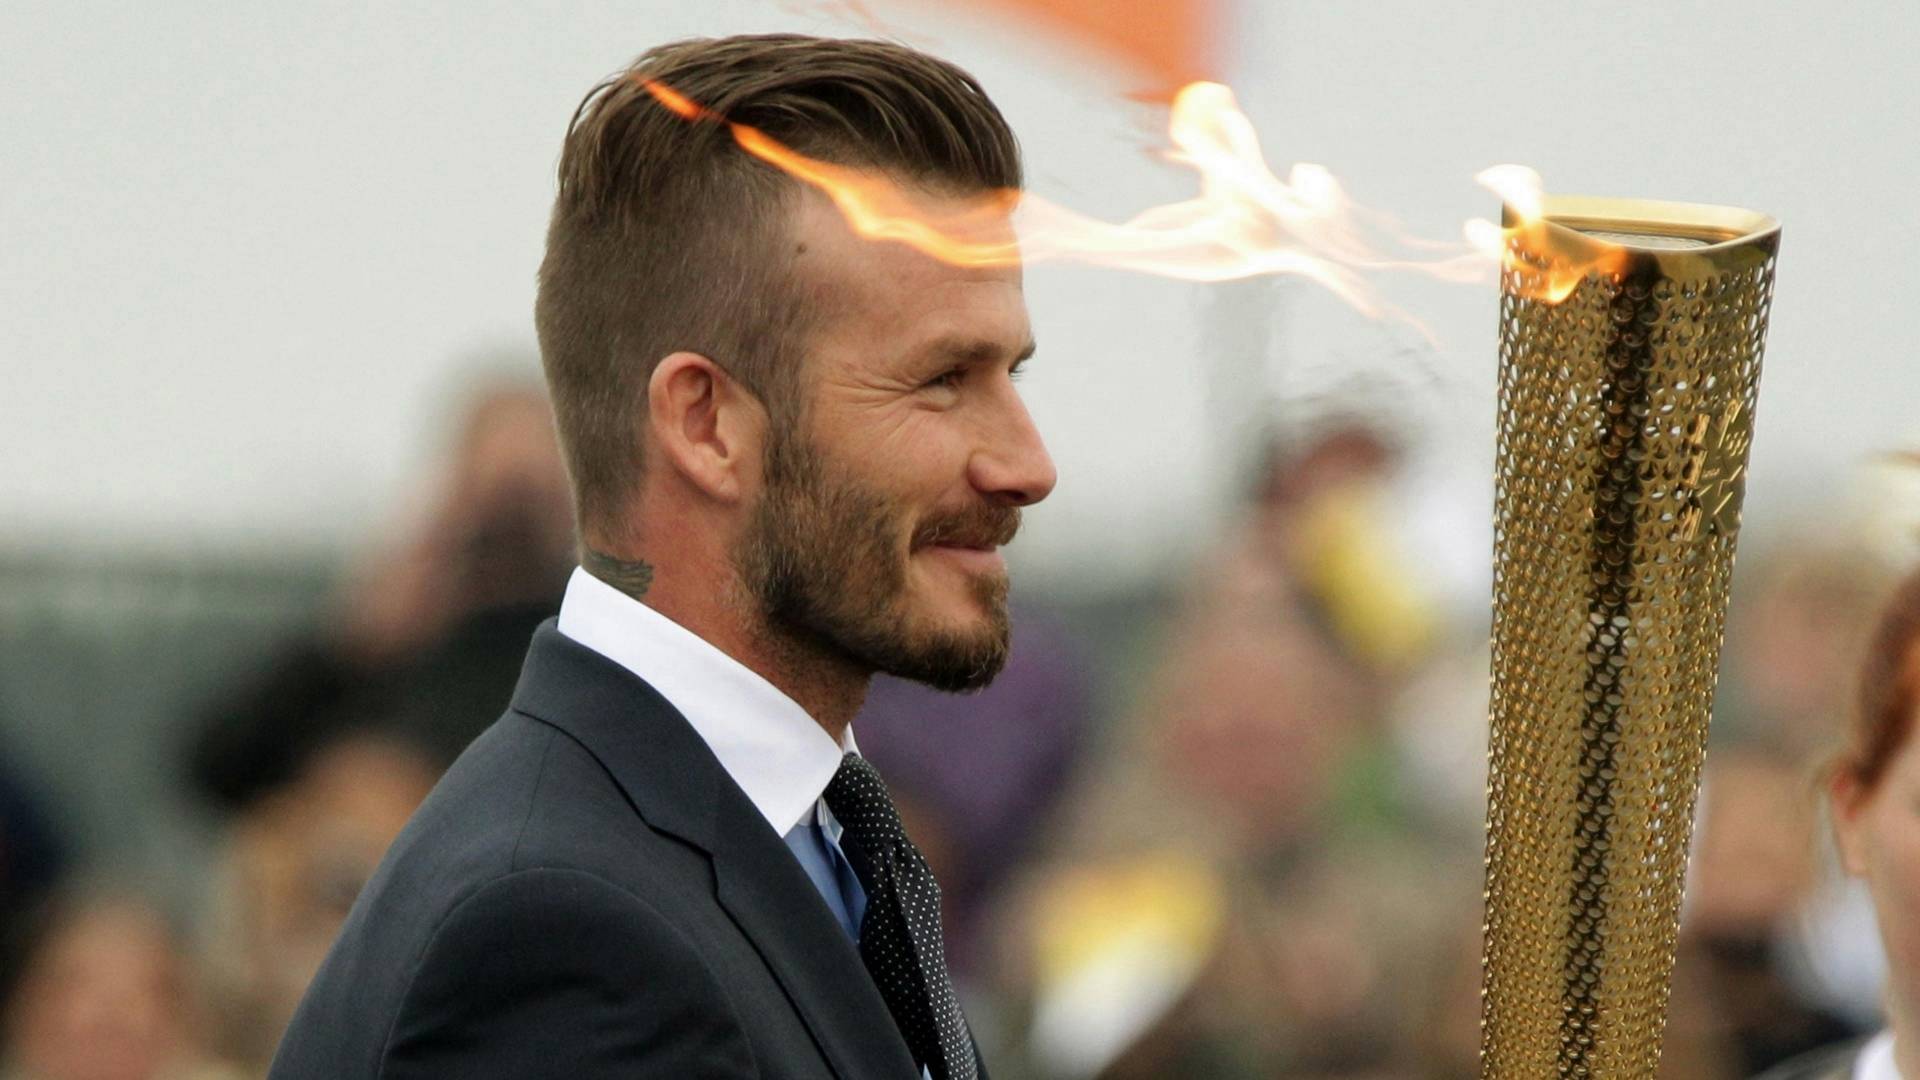 David-Beckham-Haircut-Olympics1